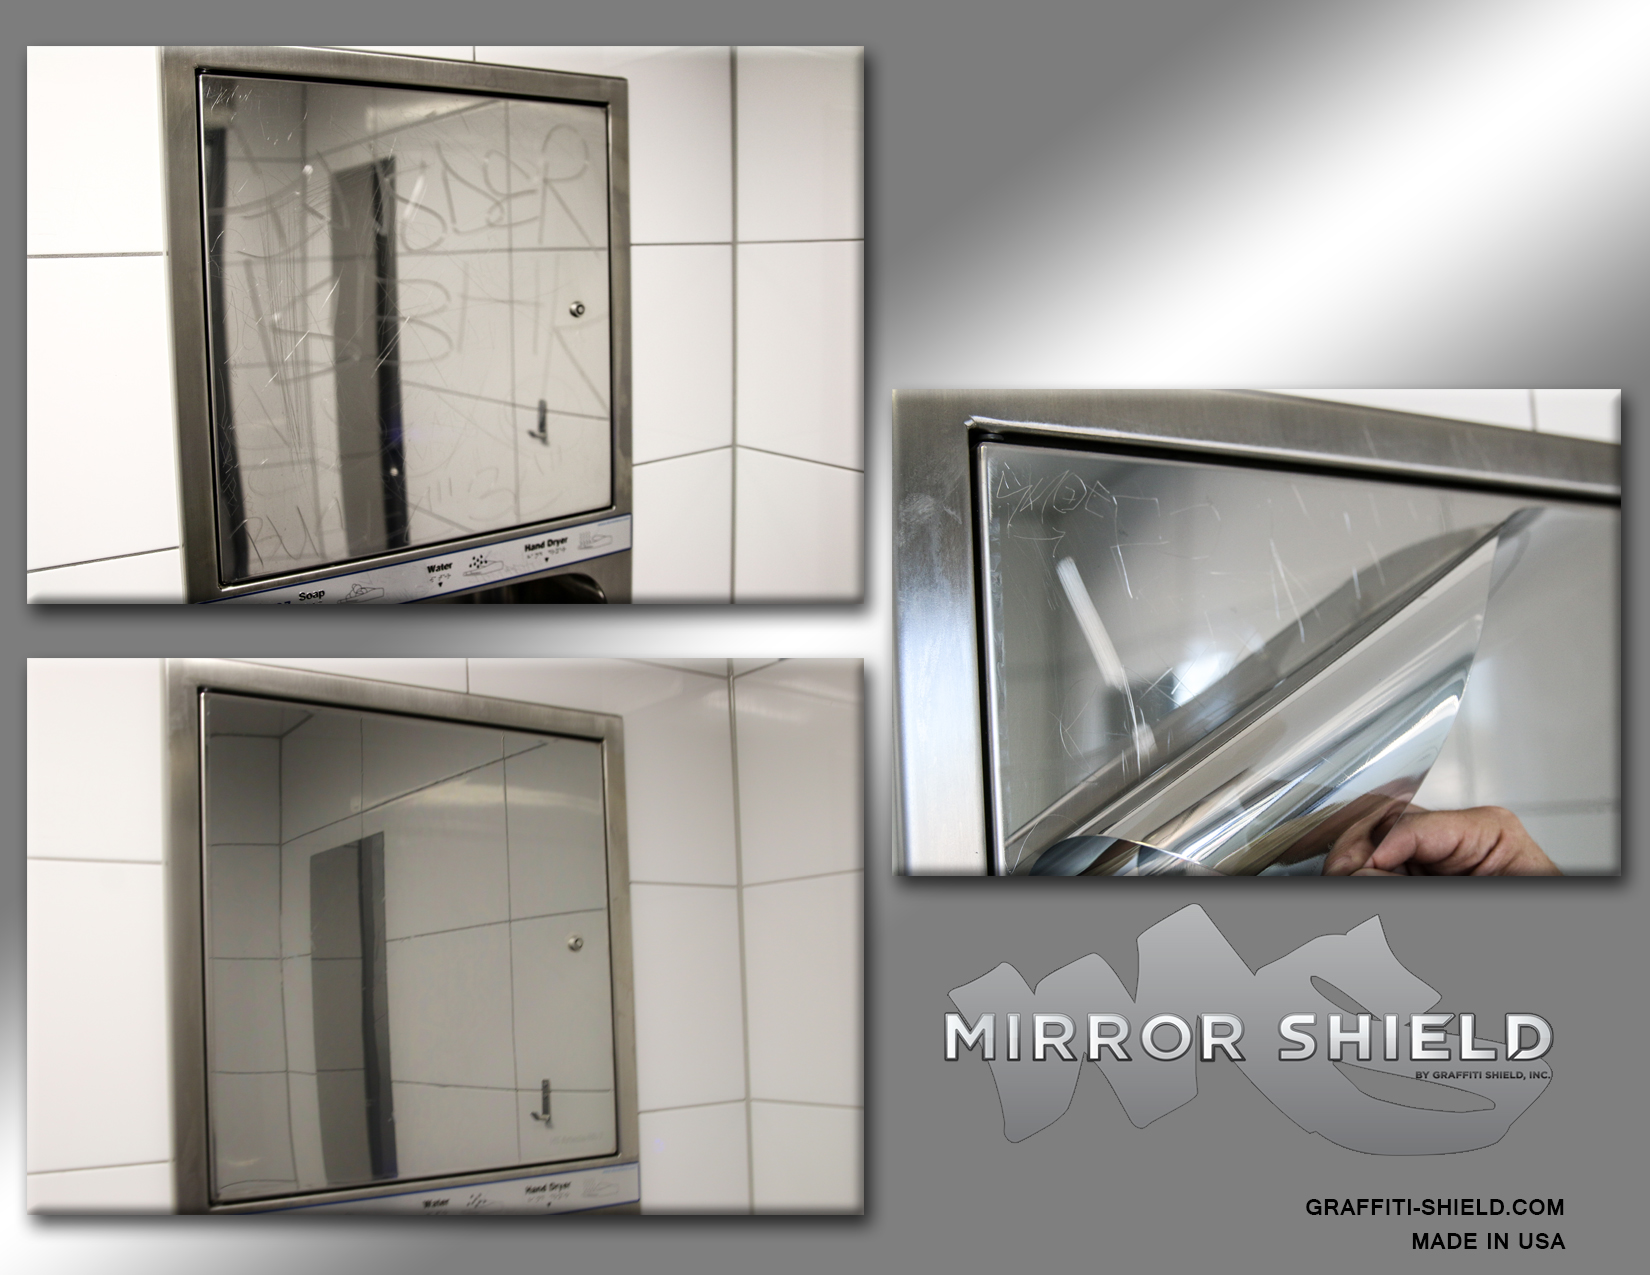 mirror shield applied to a mirror in a public restroom